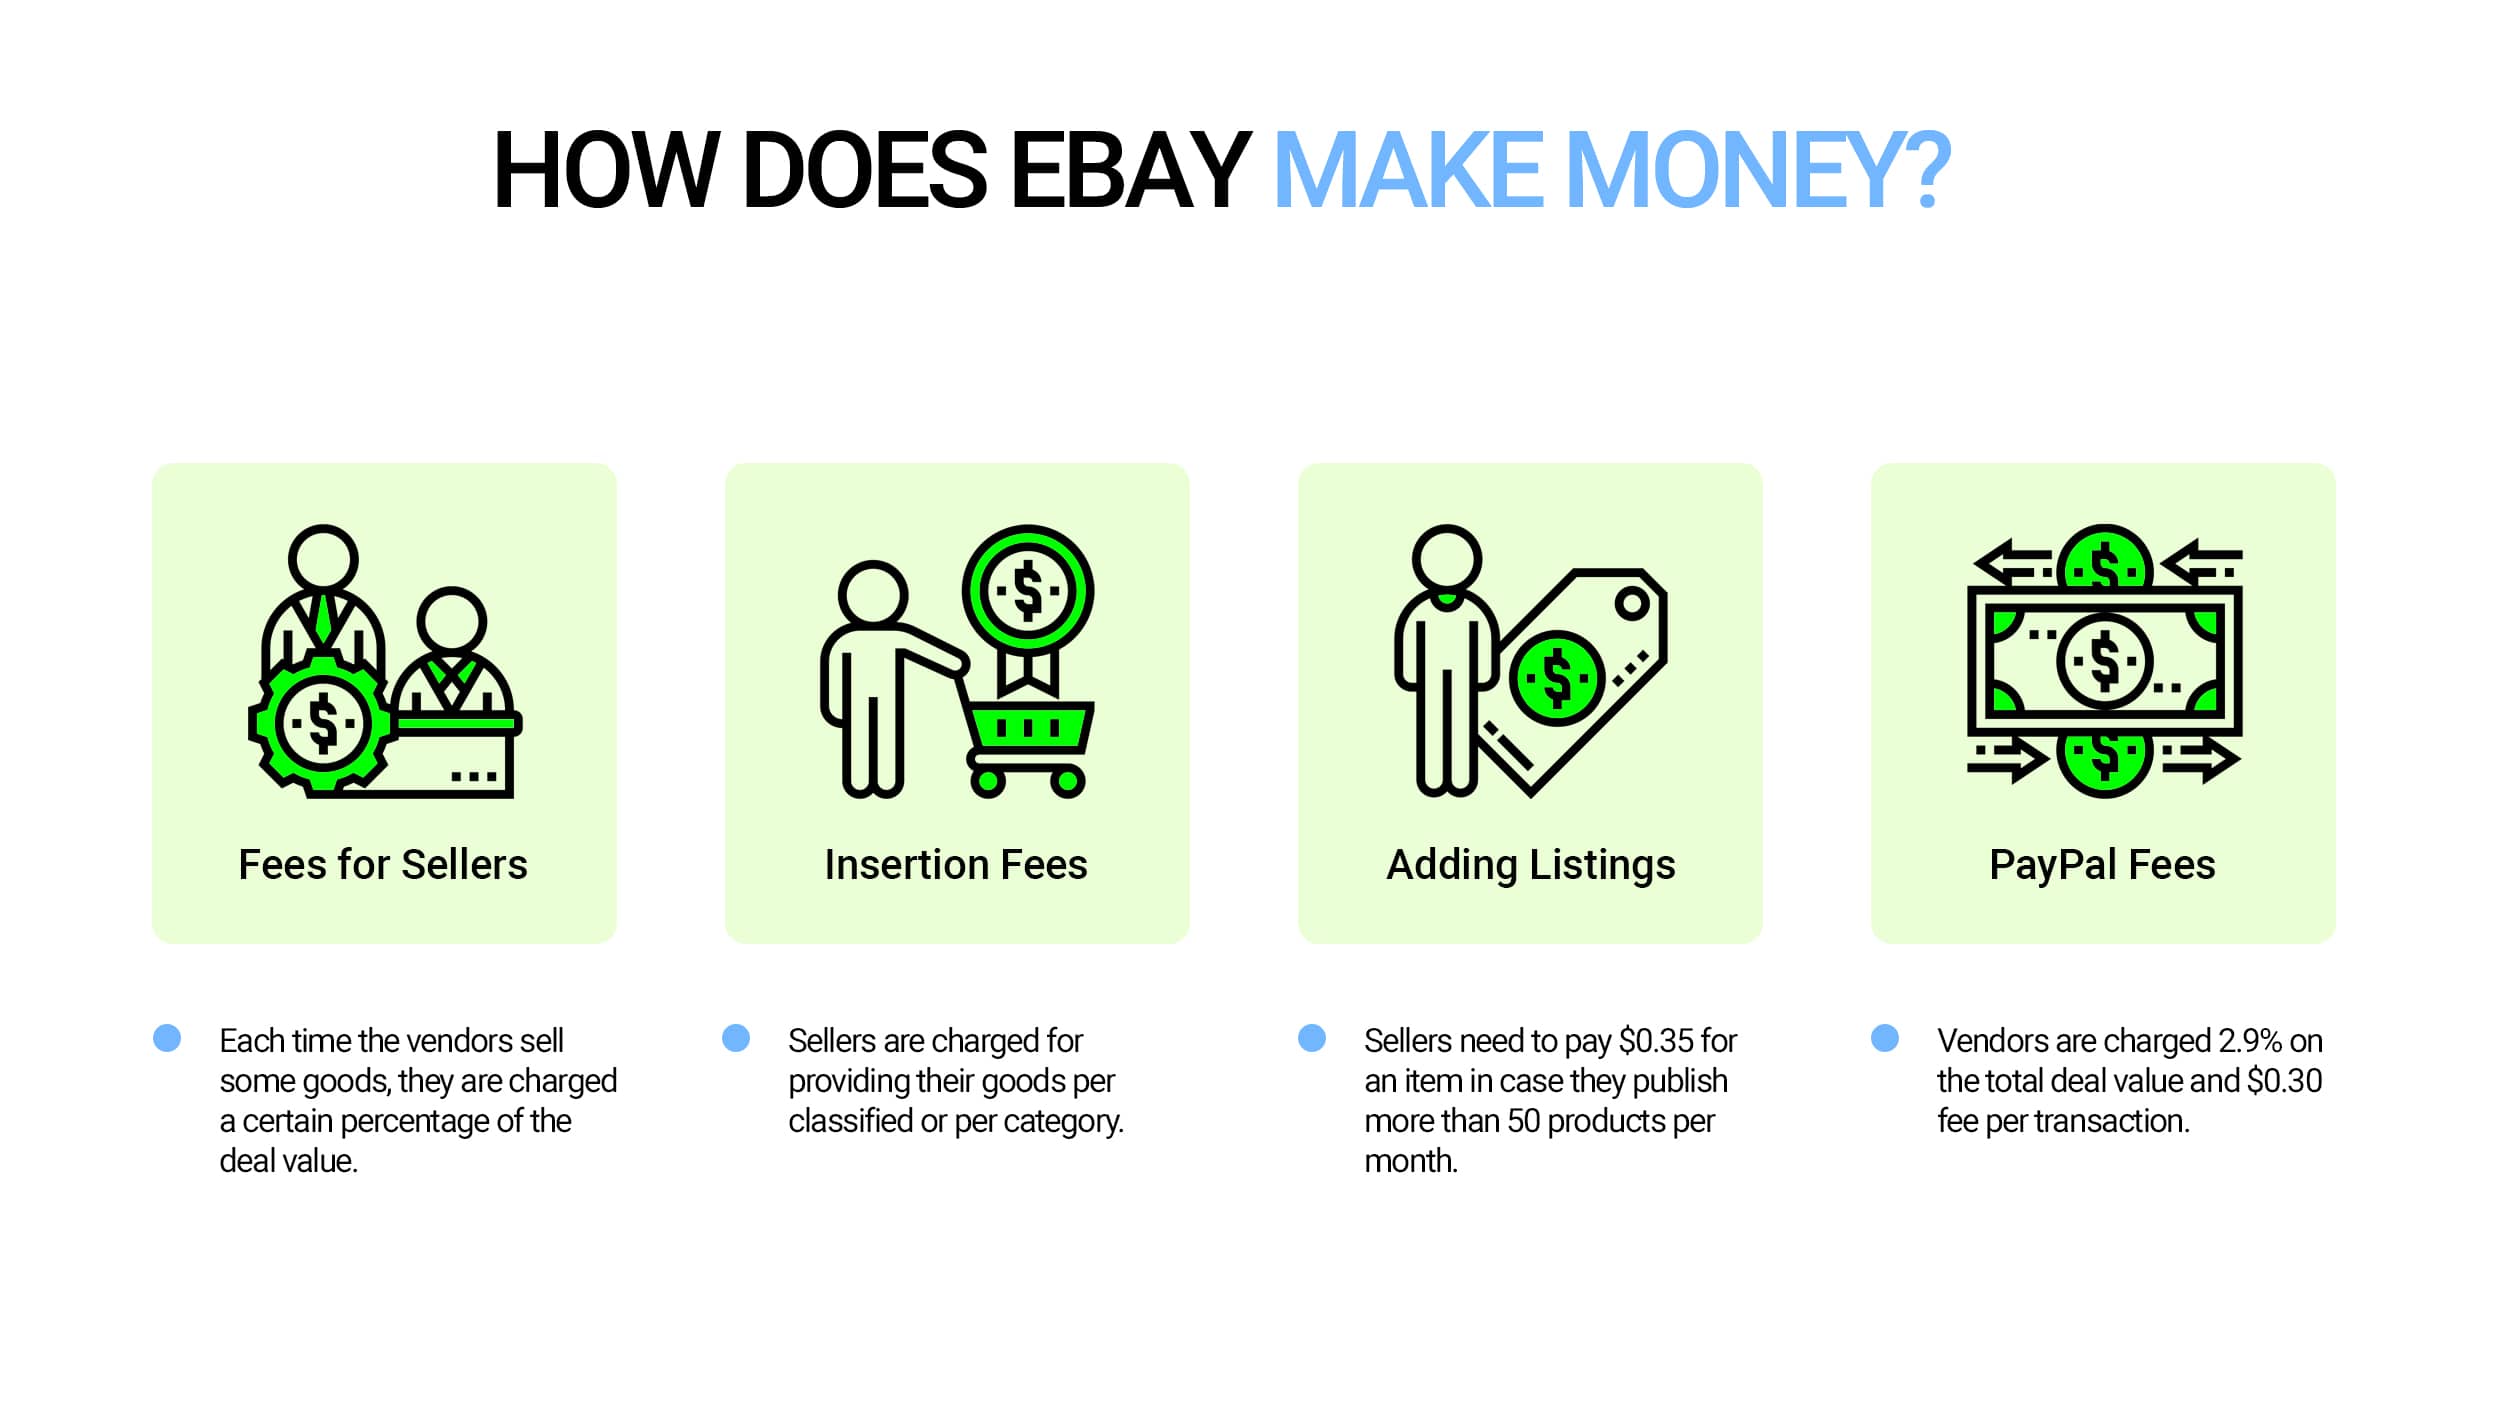 Auction Websites Like eBay Make Money